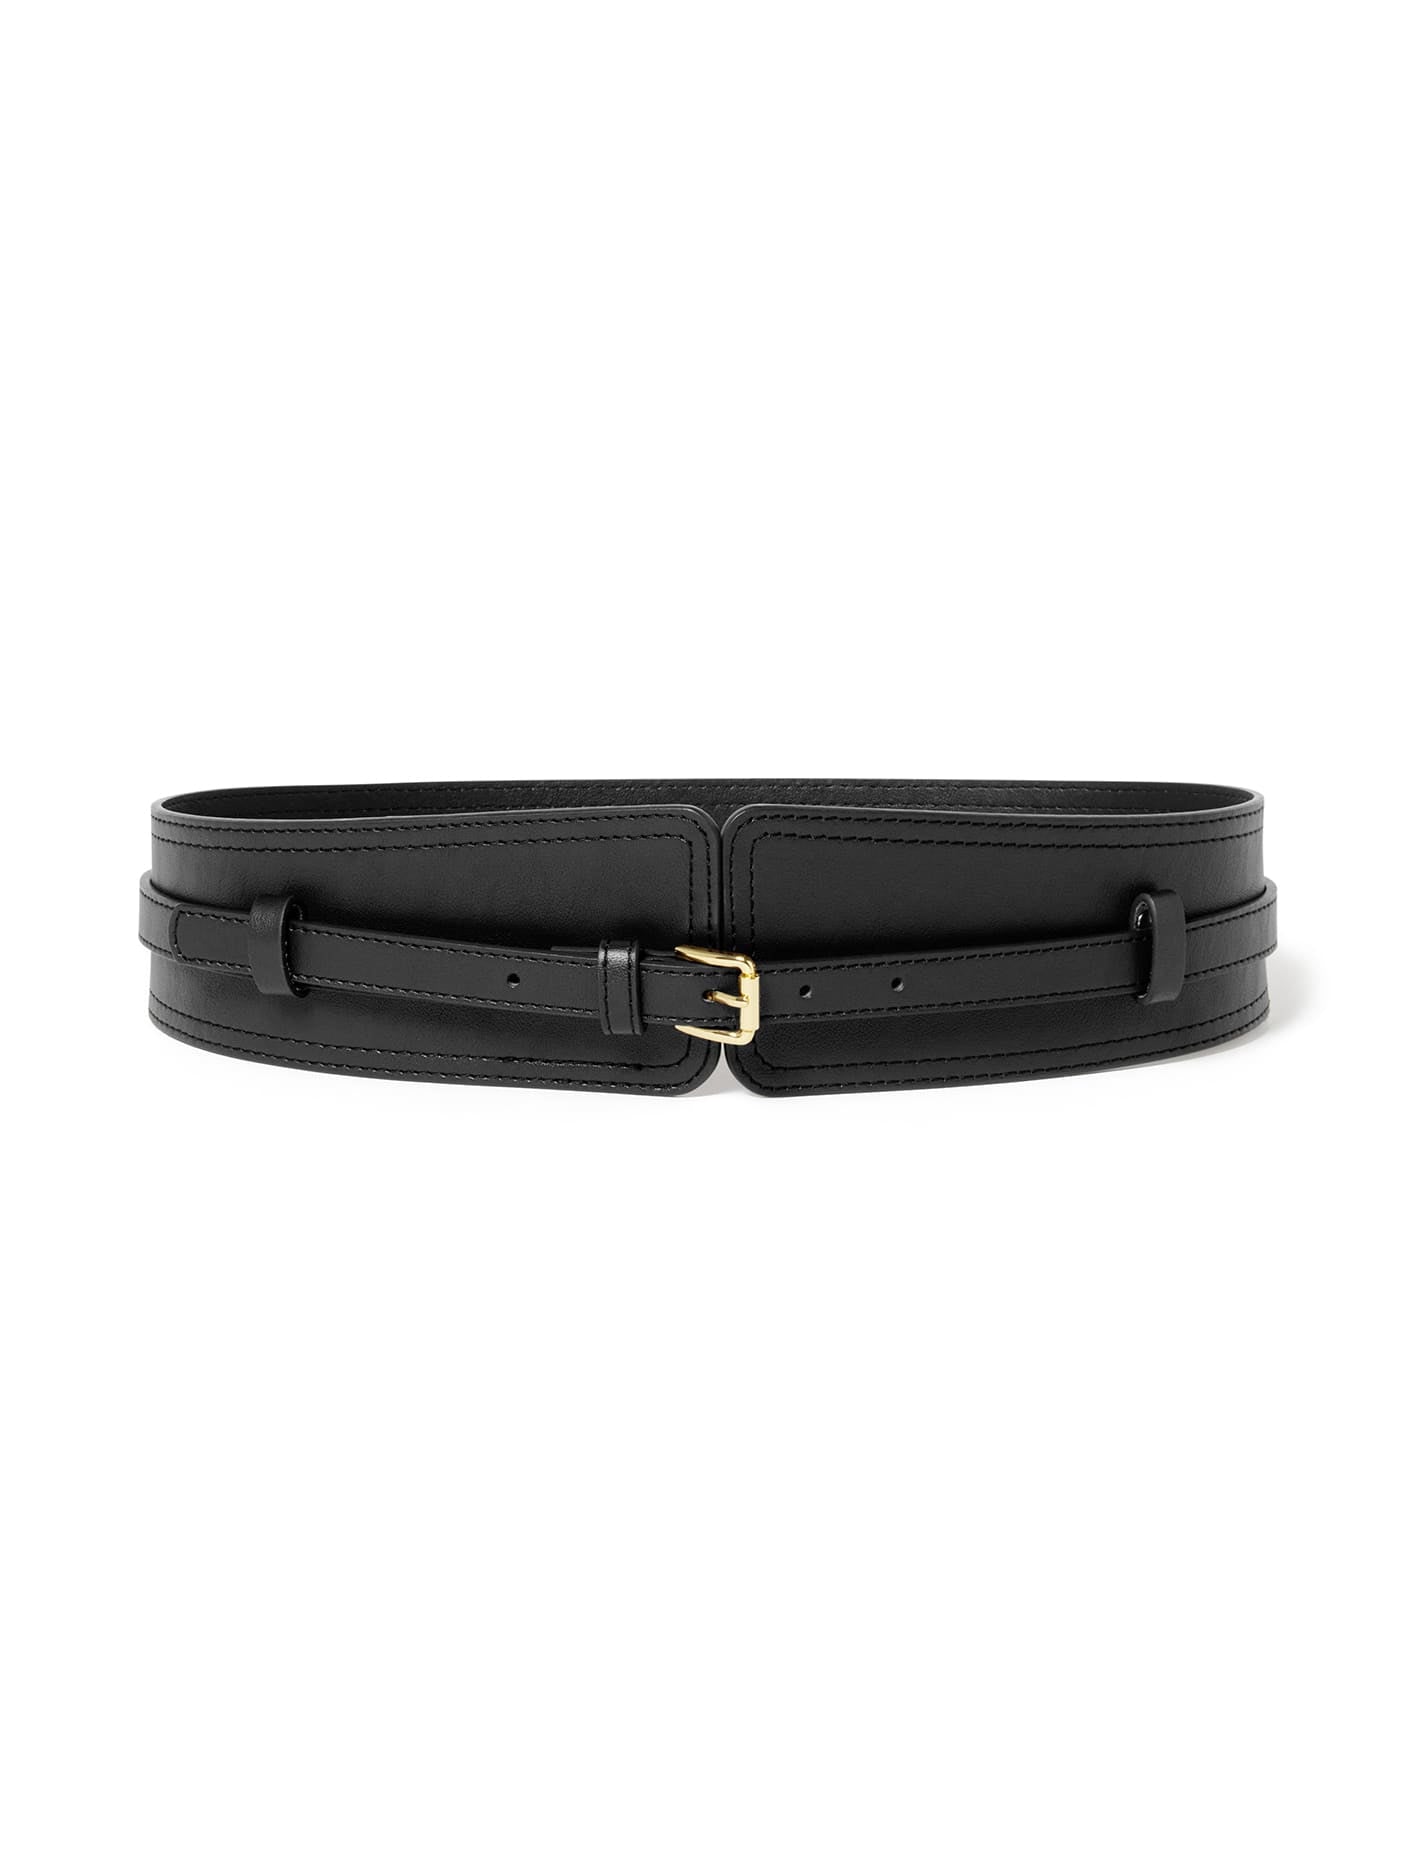 11 cm 4 inch Black Leather Wide Waist Belt, Maxi Oversized Buckle Leather Coat Belt